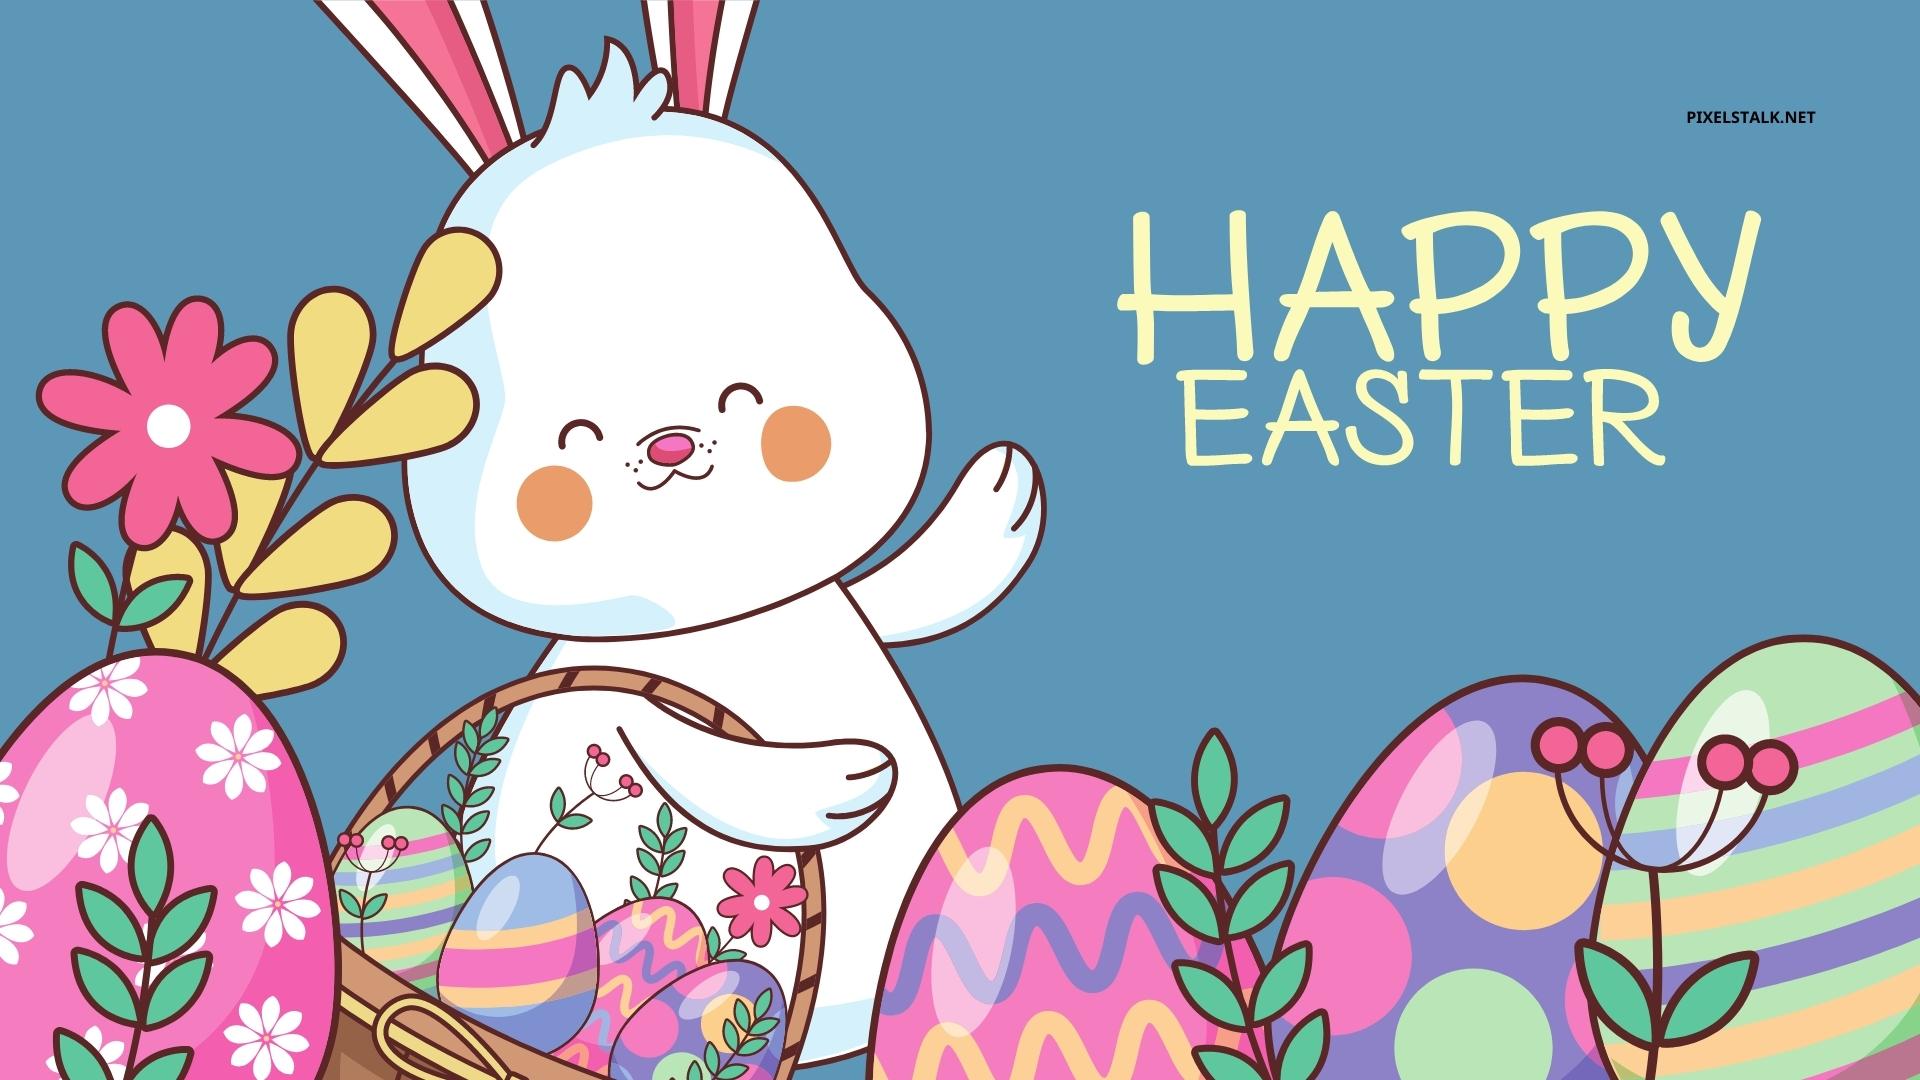 Easter Egg Wallpaper HD Free download